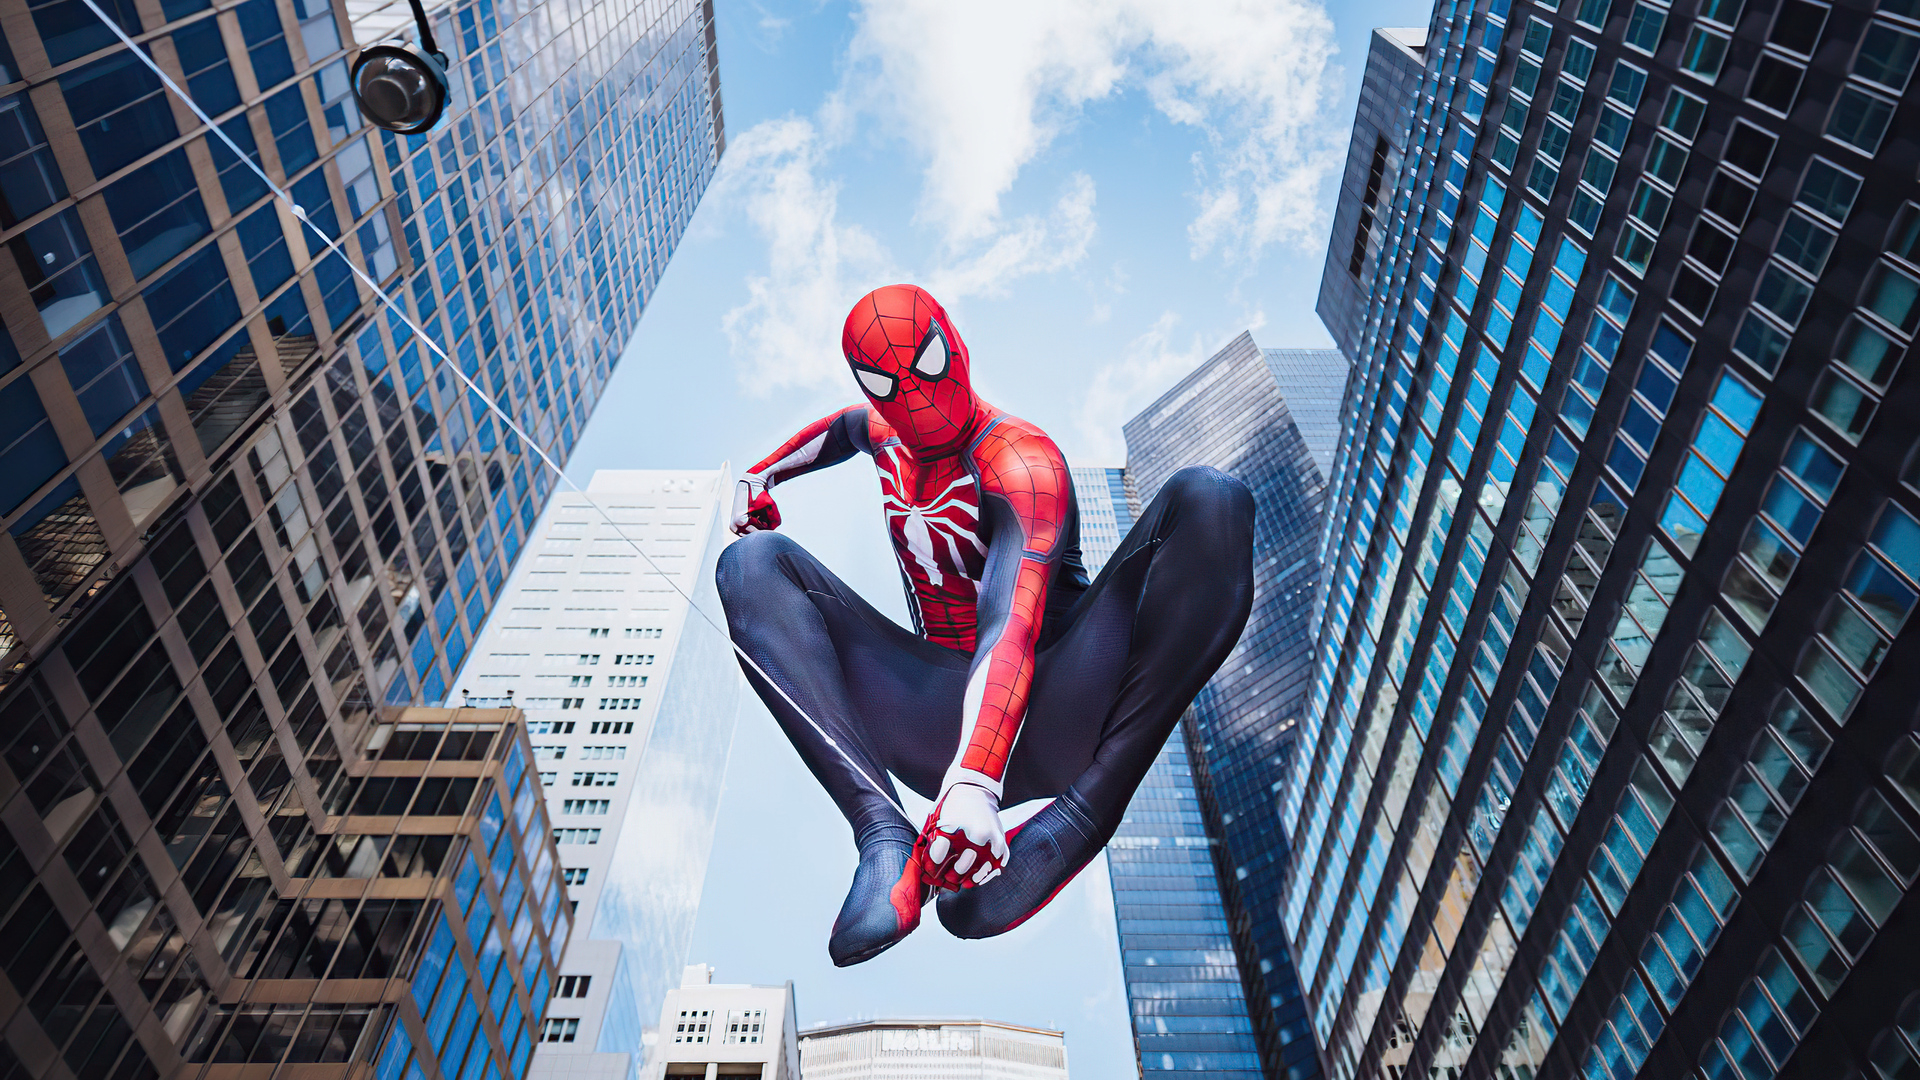 Spider-Man HD Superhero 2021 Art Wallpaper, HD Superheroes 4K Wallpapers,  Images, Photos and Background - Wallpapers Den